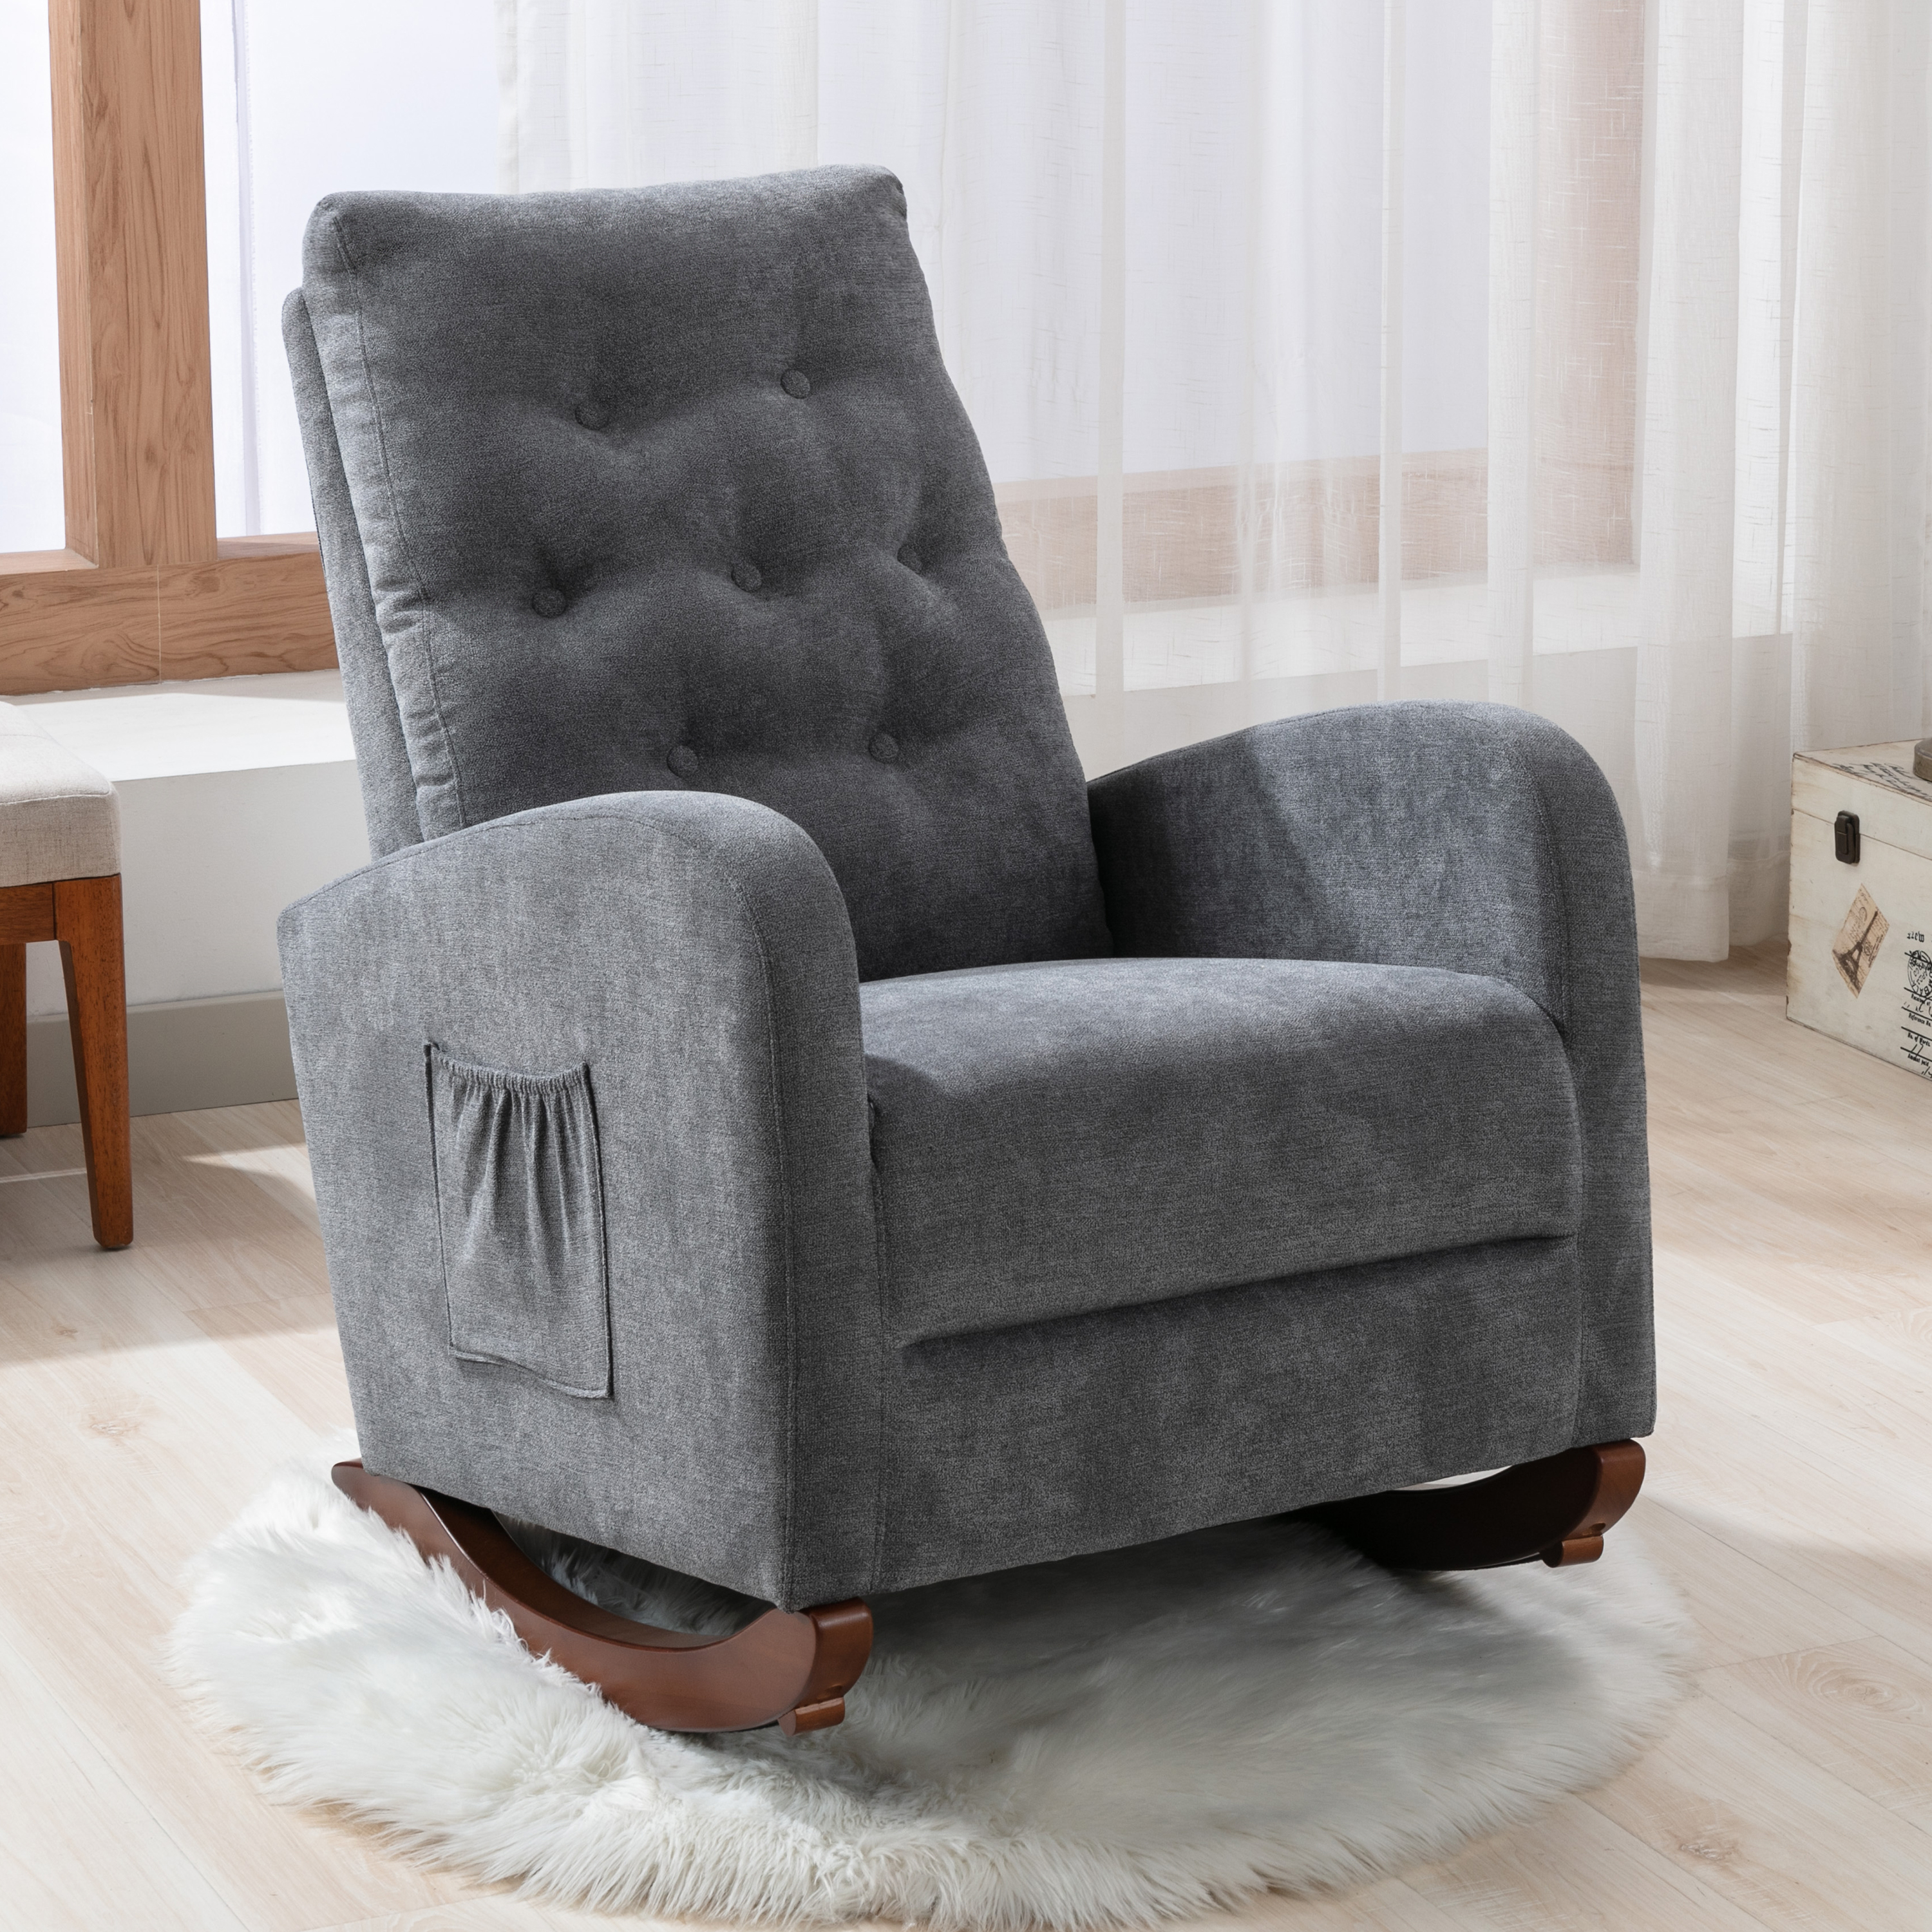 Baby Room High Back Rocking Chair Nursery Chair , Comfortable Rocker Fabric Padded Seat ,Modern High Back Armchair-Boyel Living